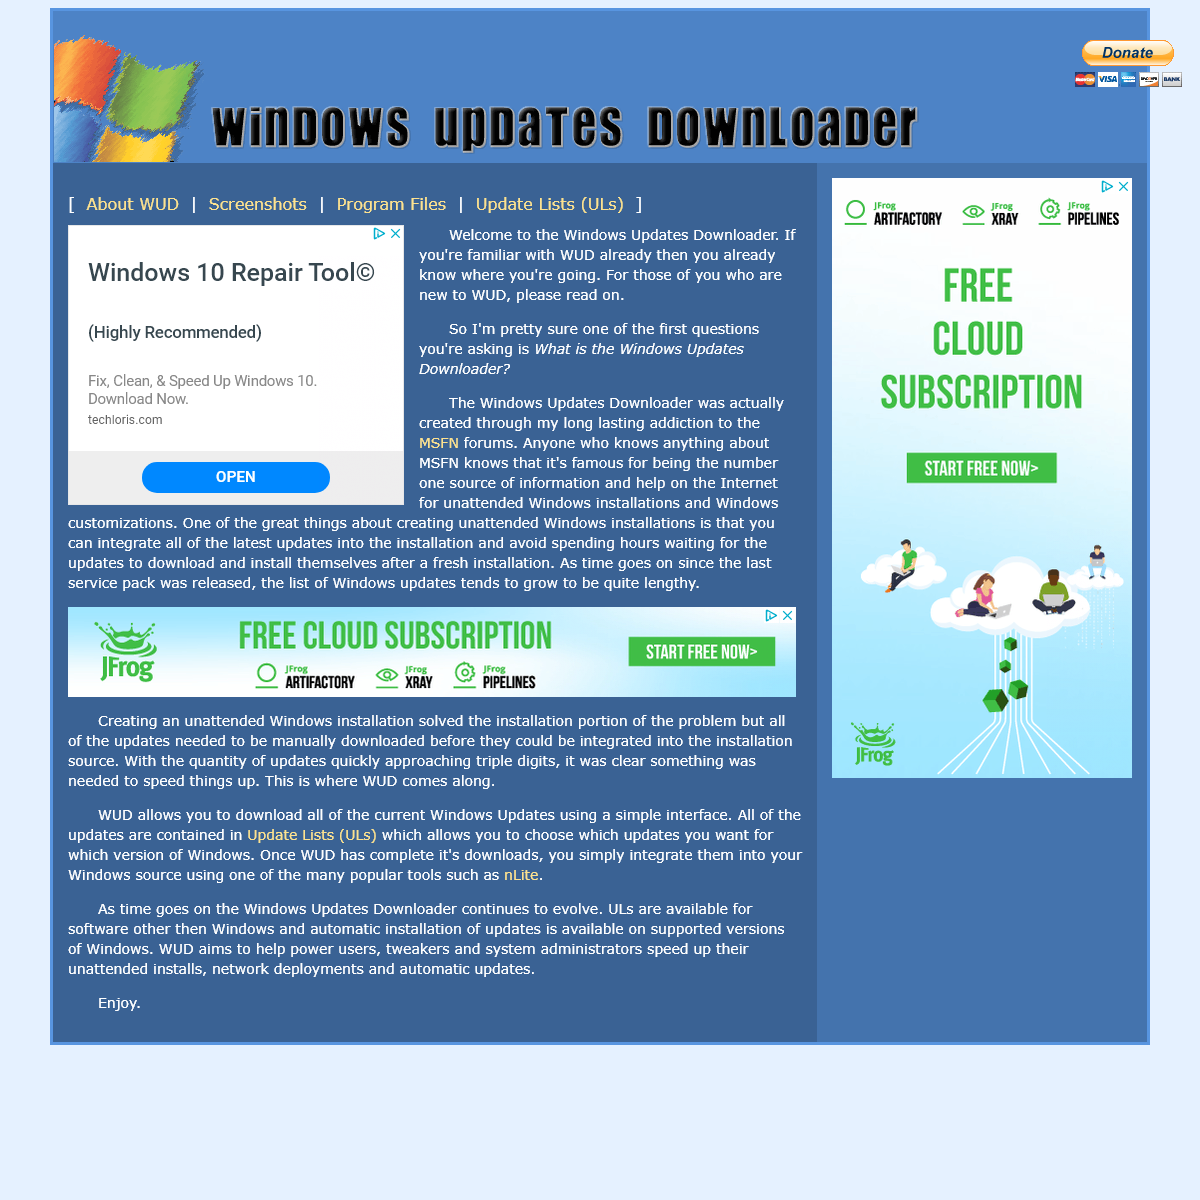 A complete backup of windowsupdatesdownloader.com